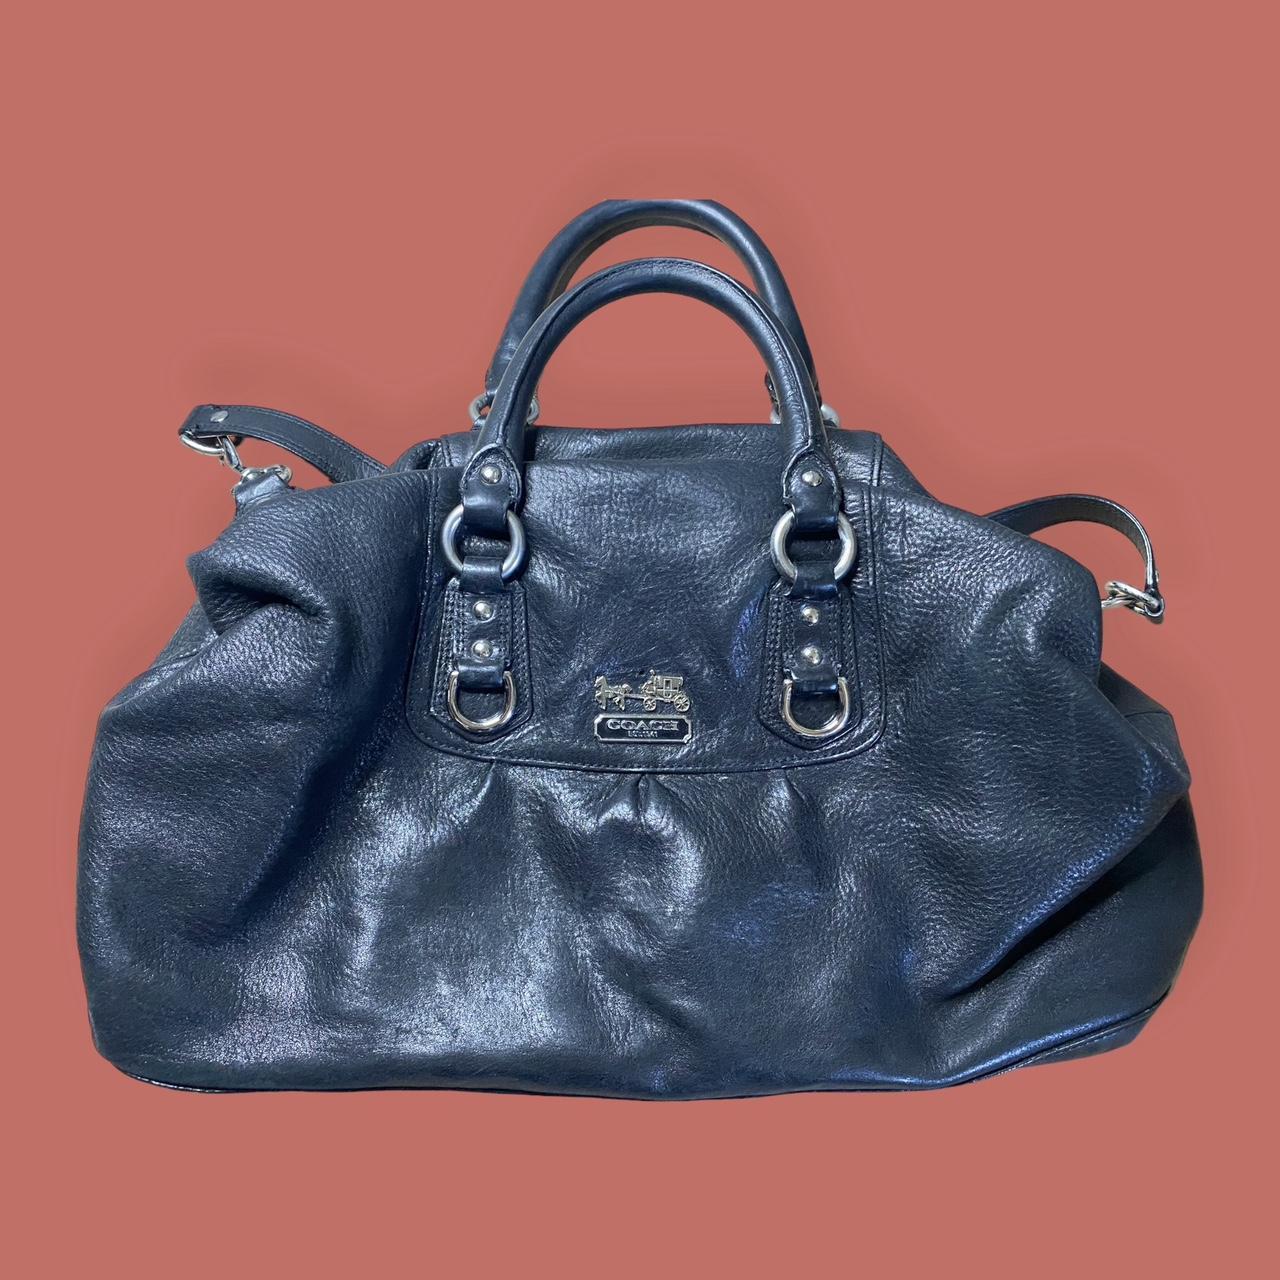 chanel sling purse